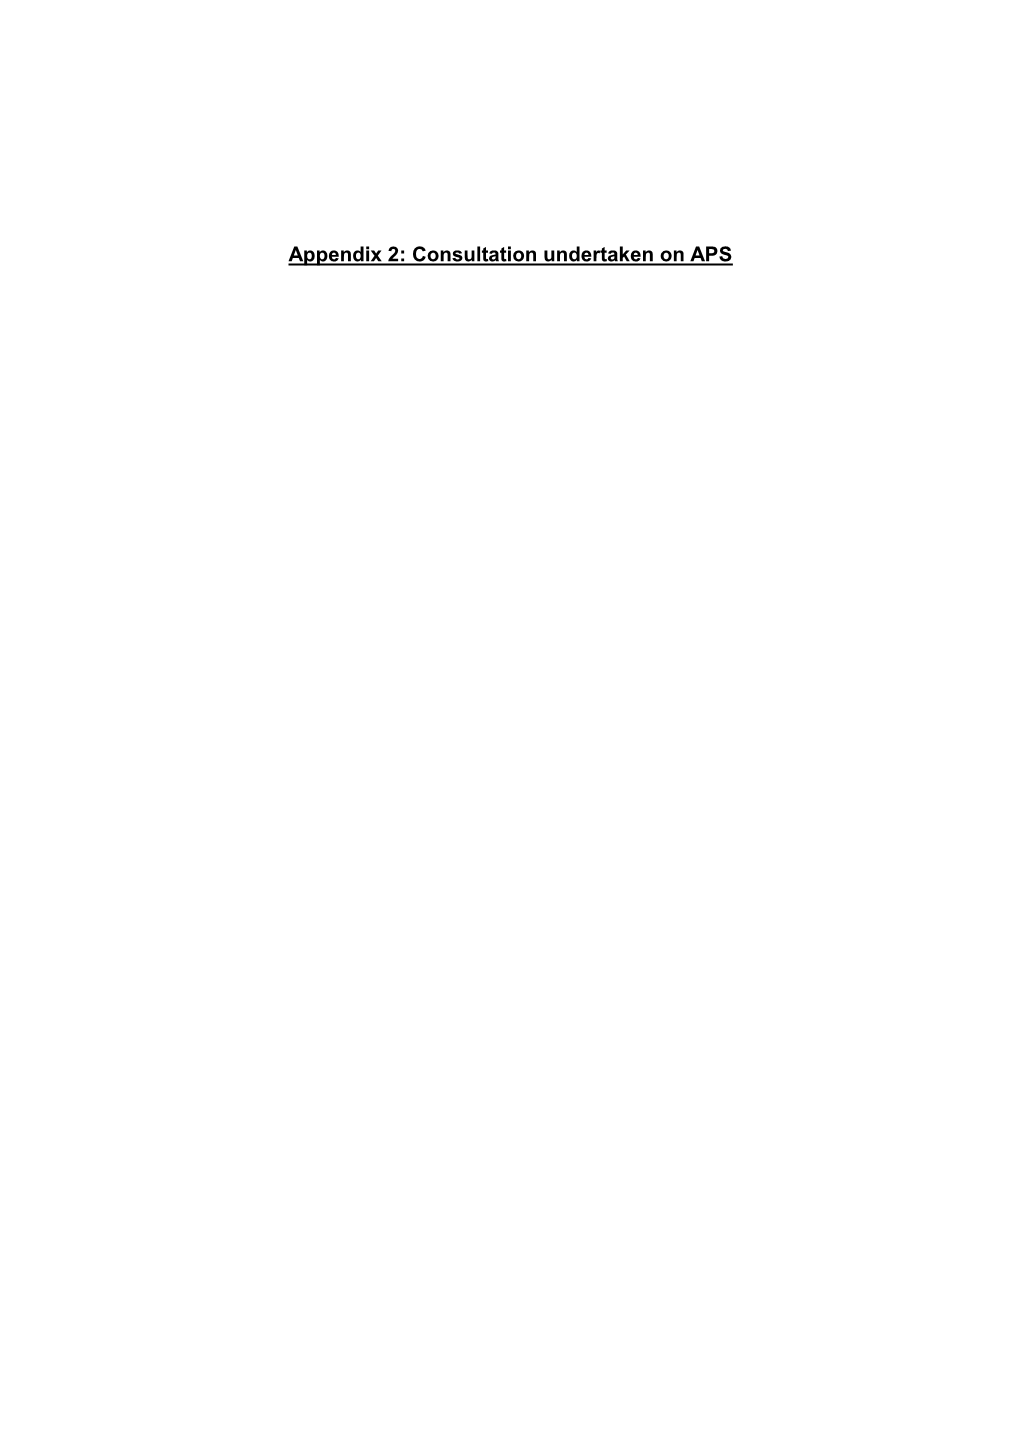 Appendix 2: Consultation Undertaken on APS